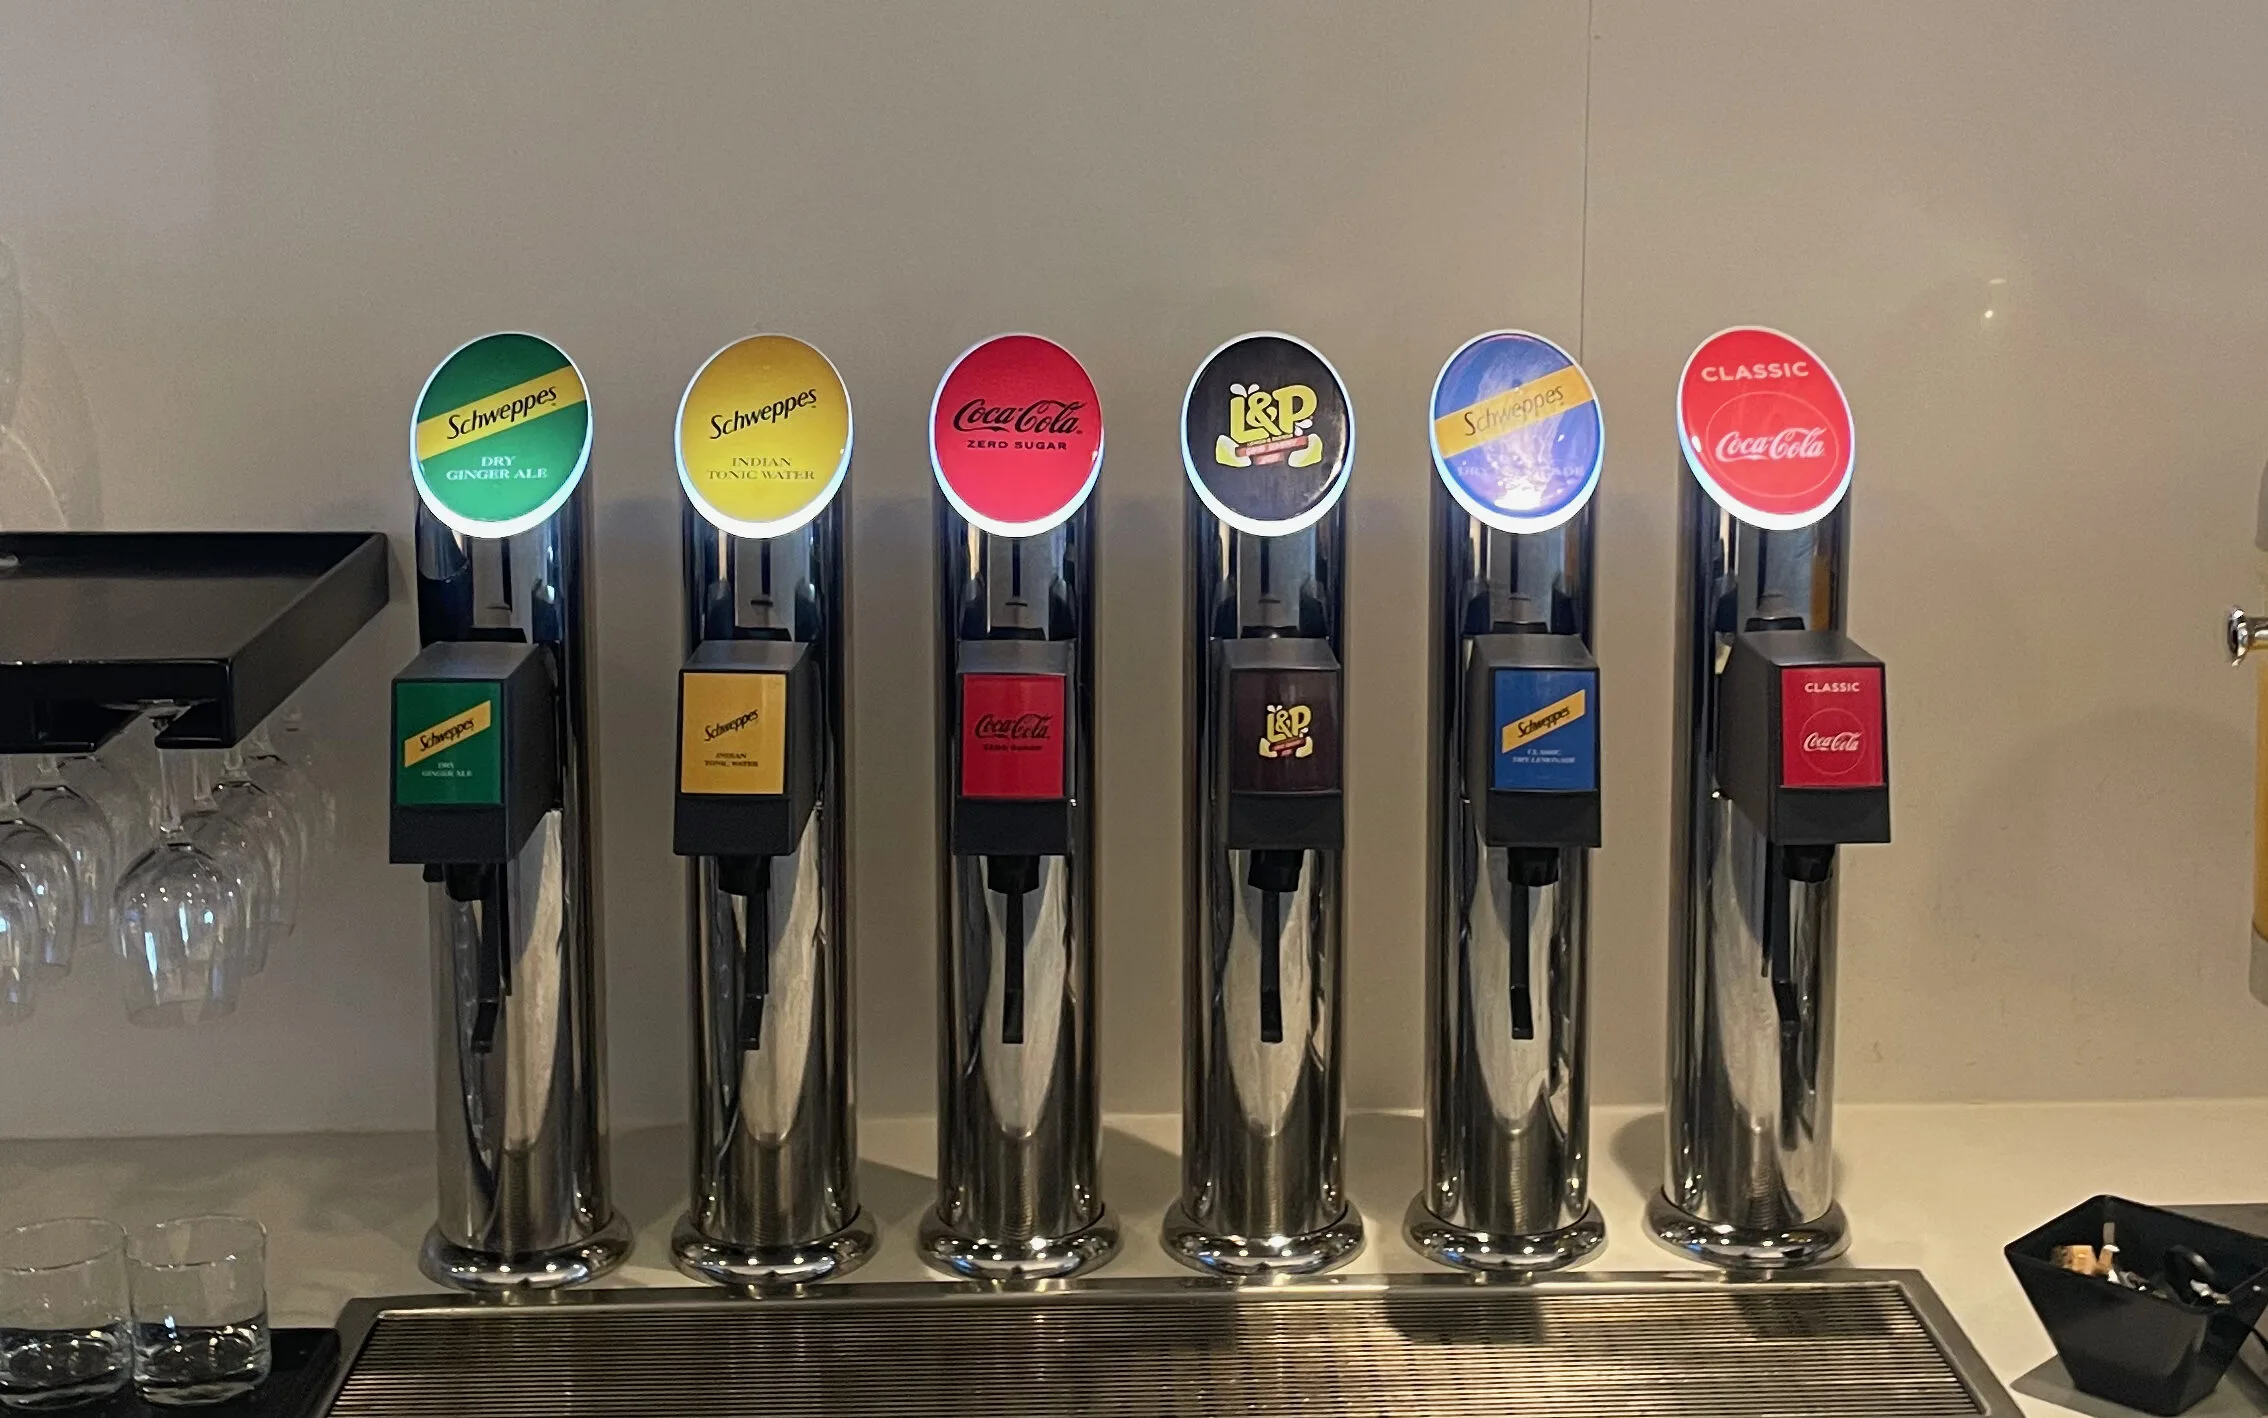 Air New Zealand Auckland Airport Lounge soft drink dispenser